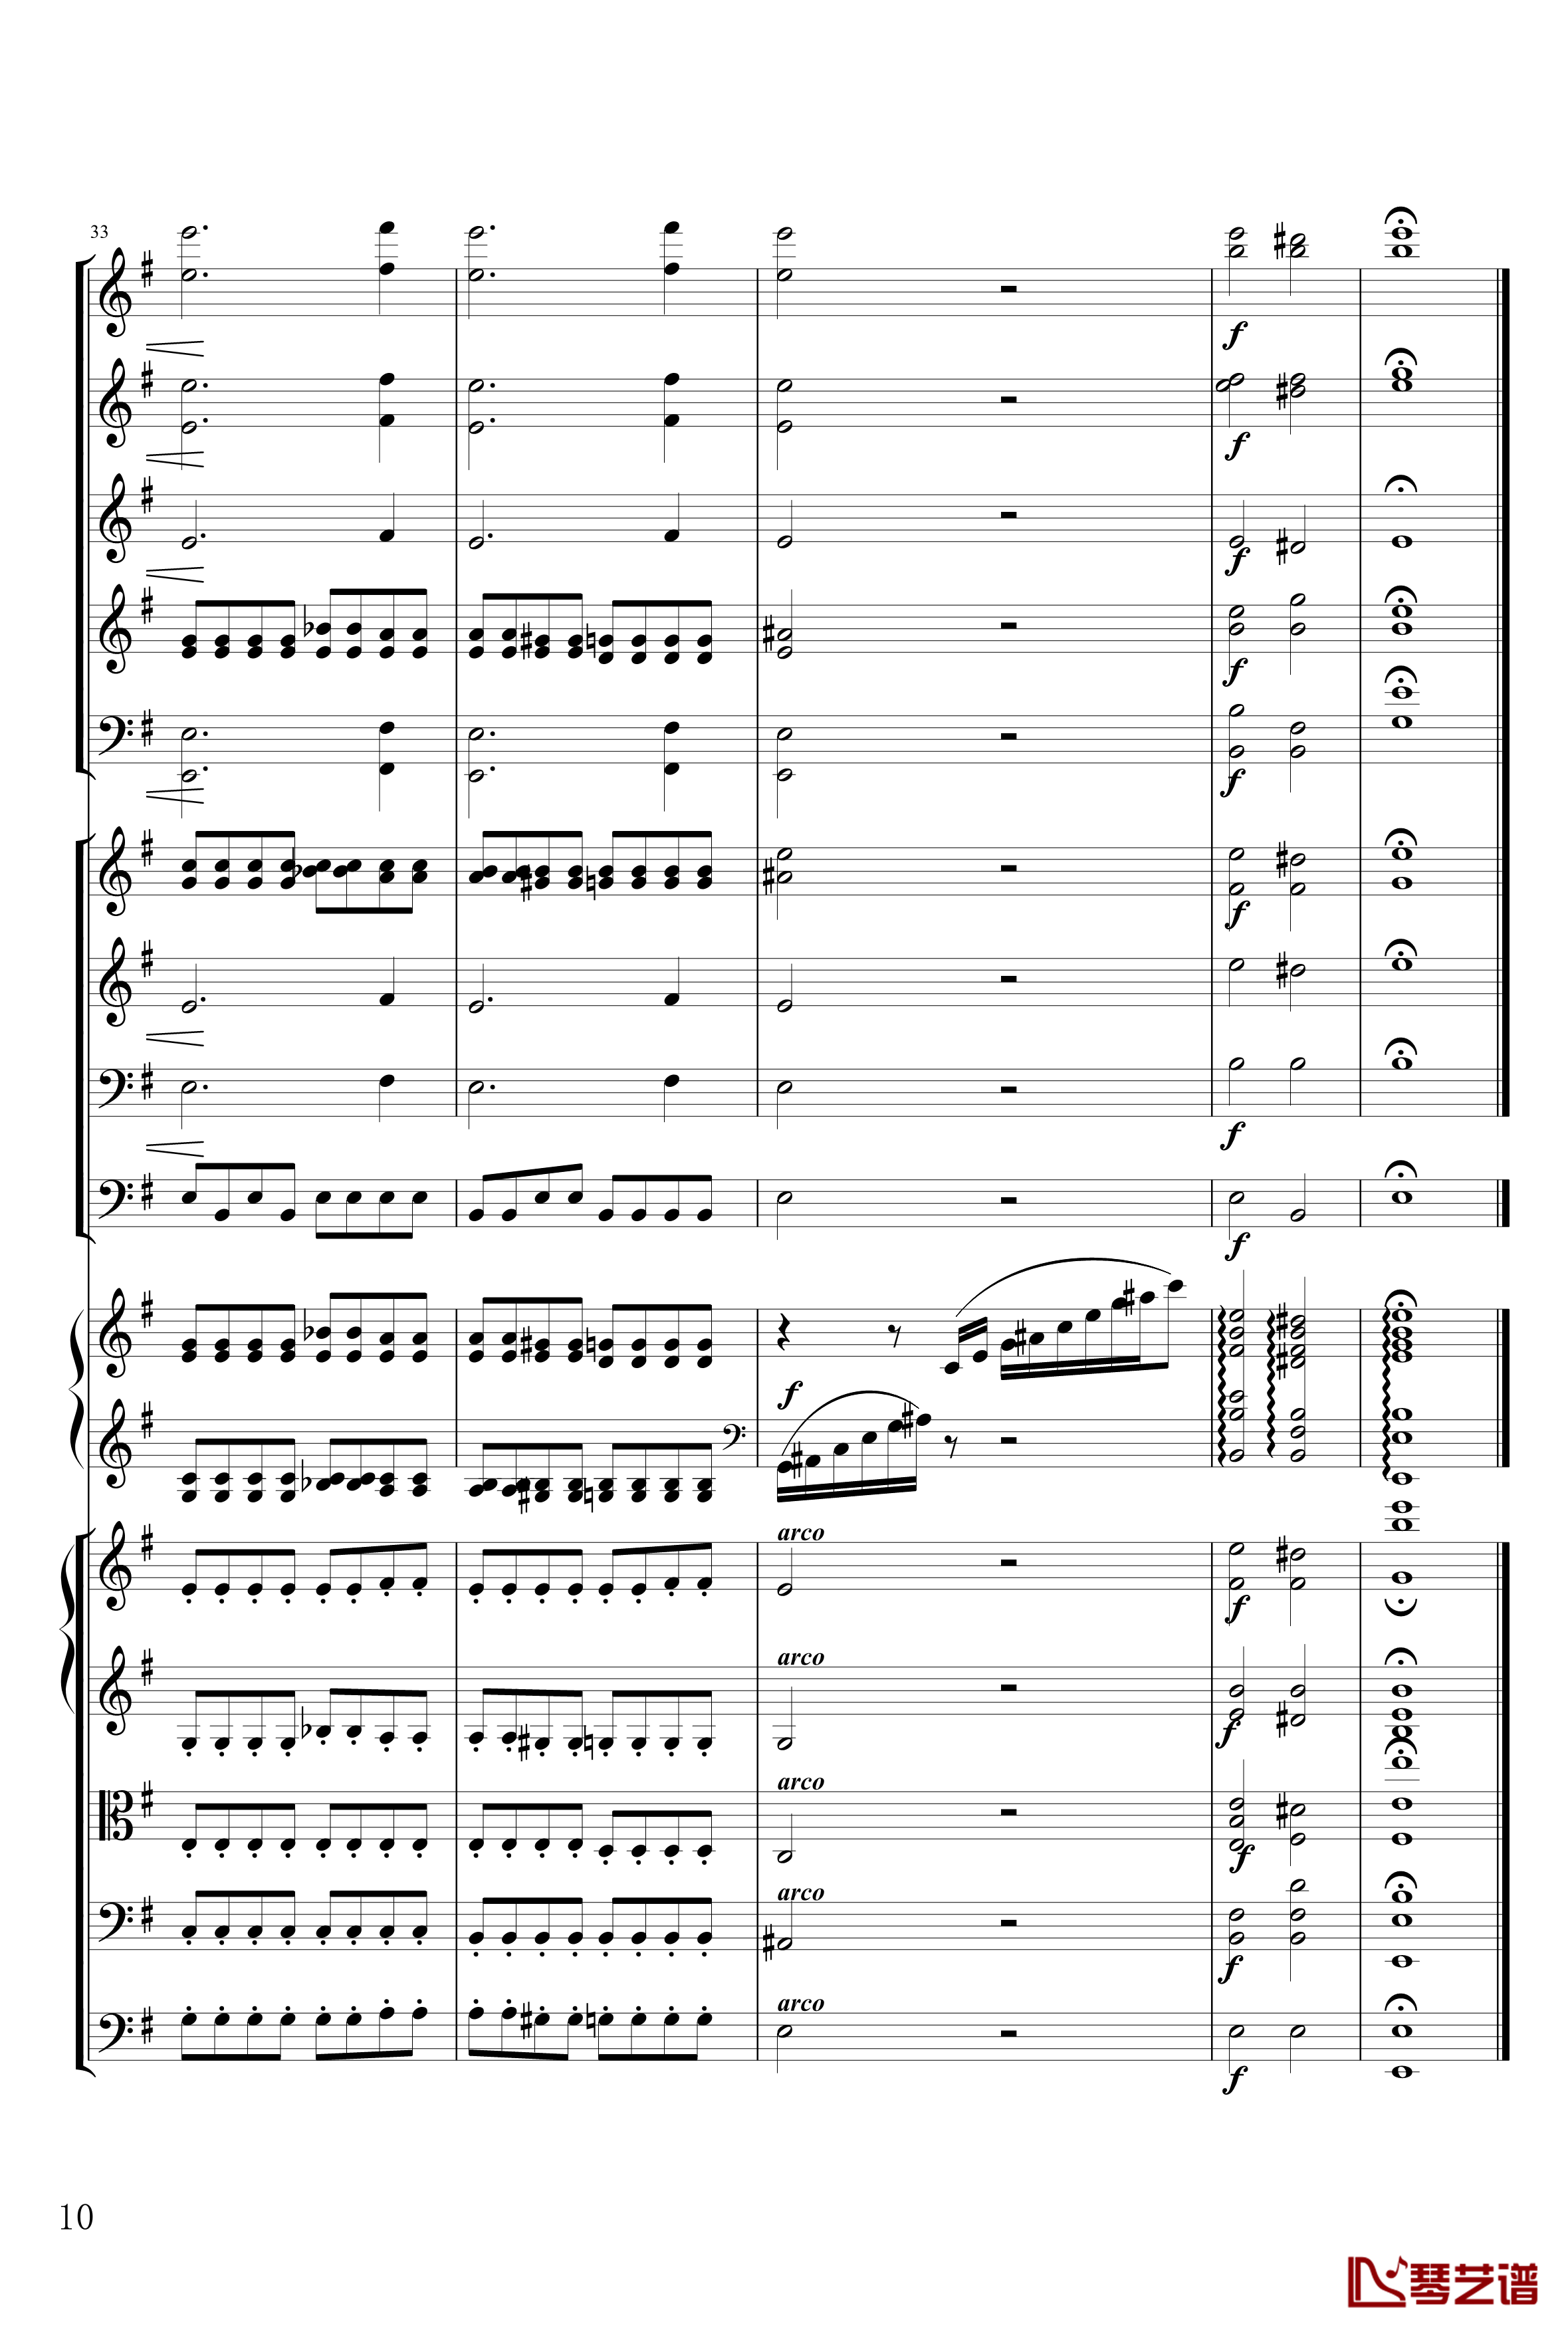 E小调前奏曲钢琴谱-交响乐版-肖邦-chopin10